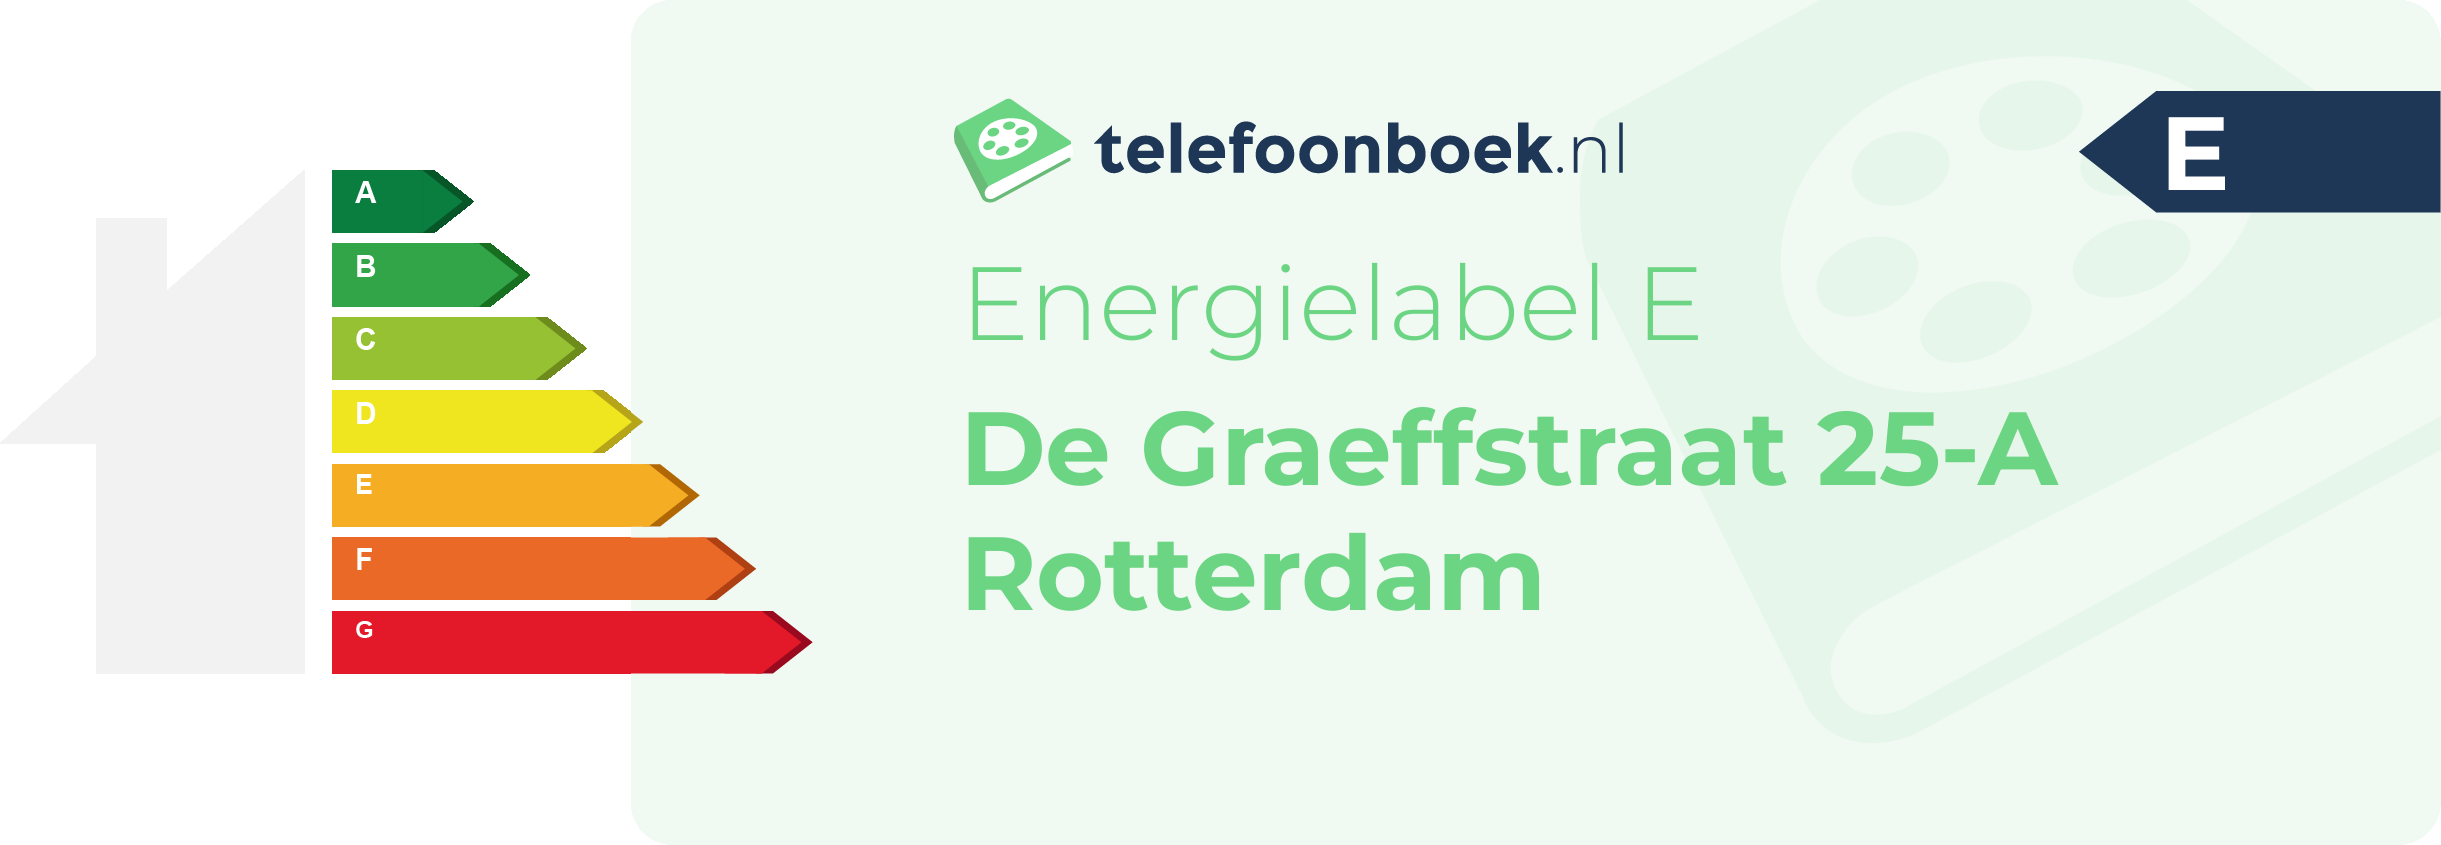 Energielabel De Graeffstraat 25-A Rotterdam